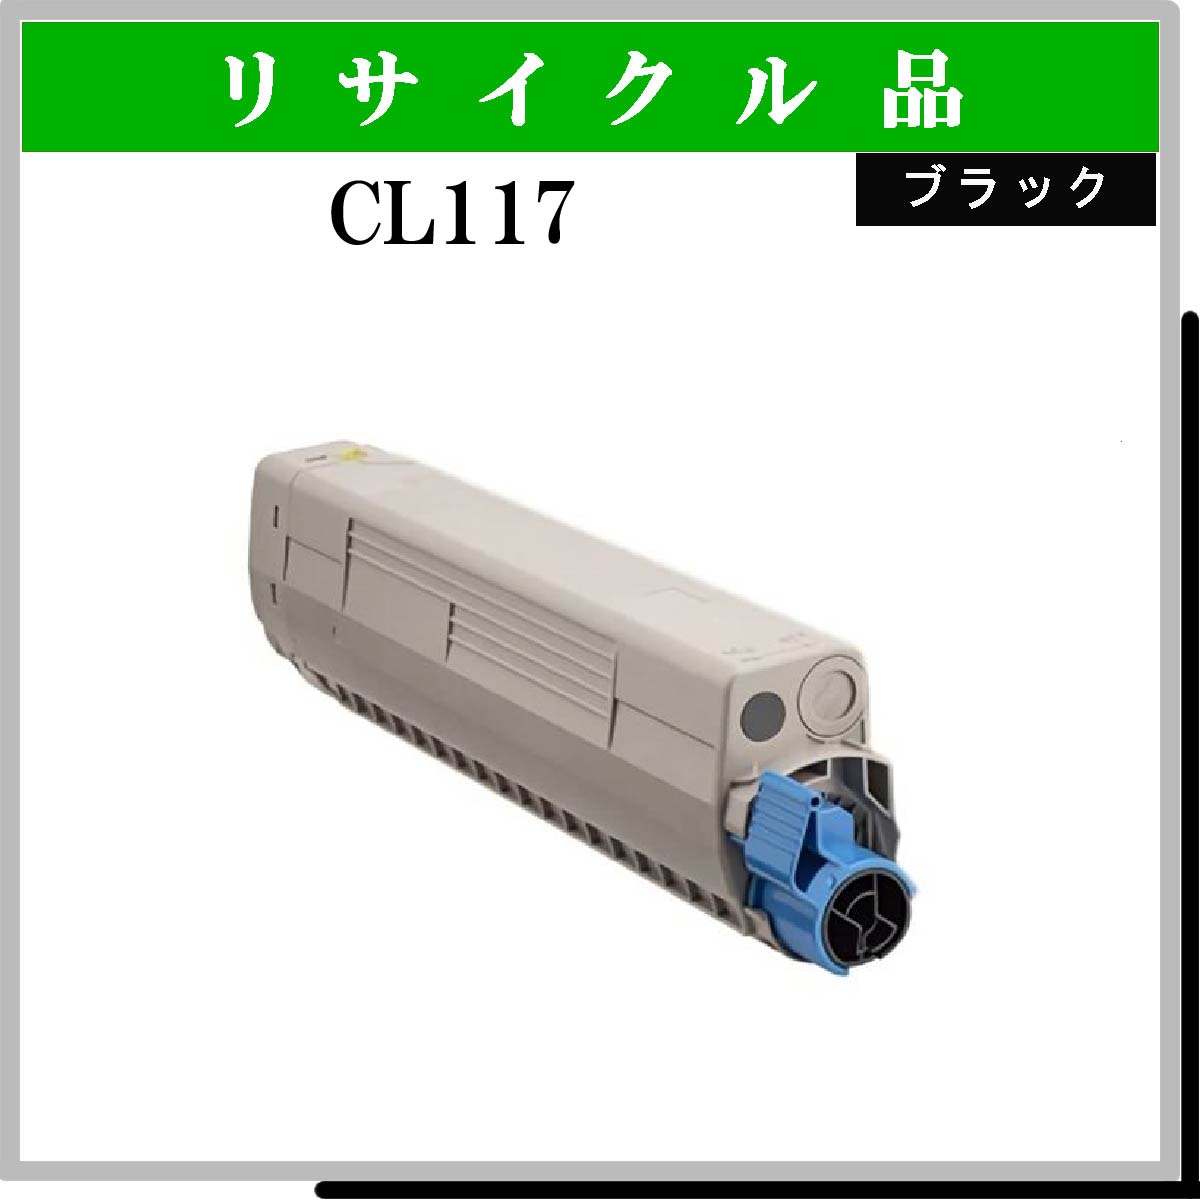 CL117 ﾌﾞﾗｯｸ - ウインドウを閉じる